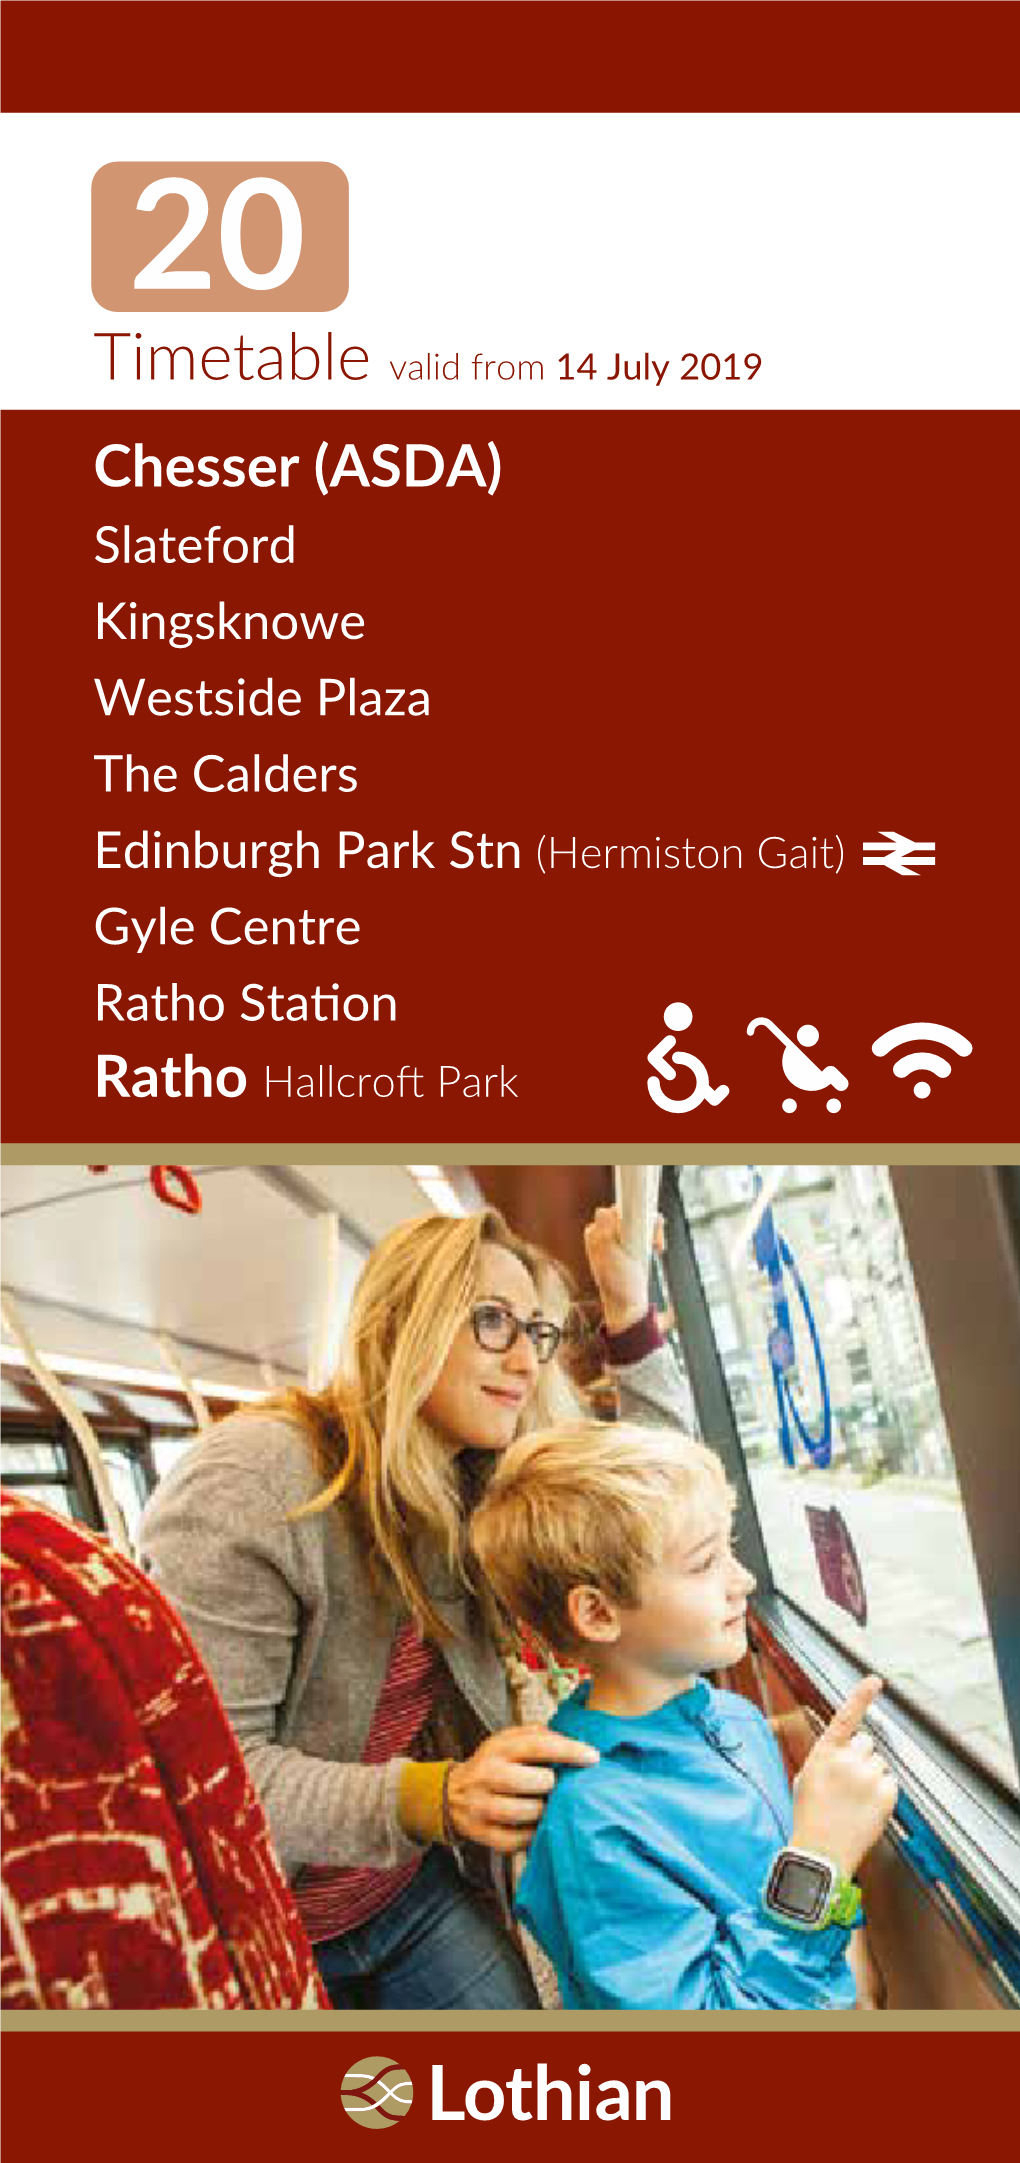 Edinburgh Park Station • Gyle Centre • Ratho